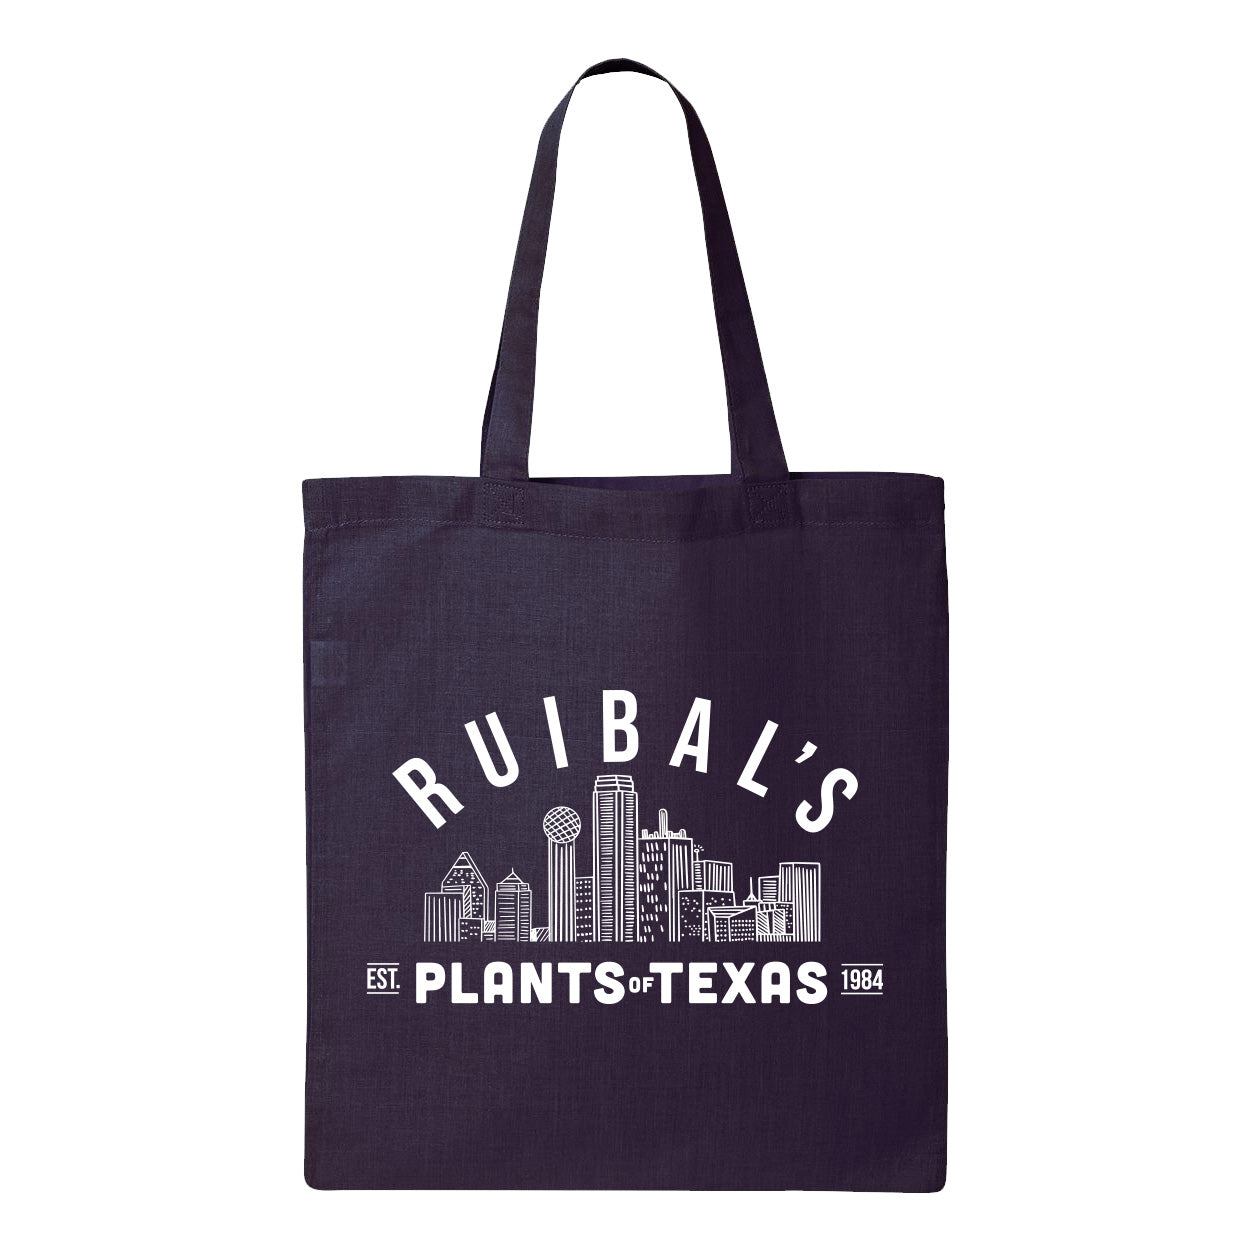 Ruibal's Plants of Texas - Custom Tote Bag